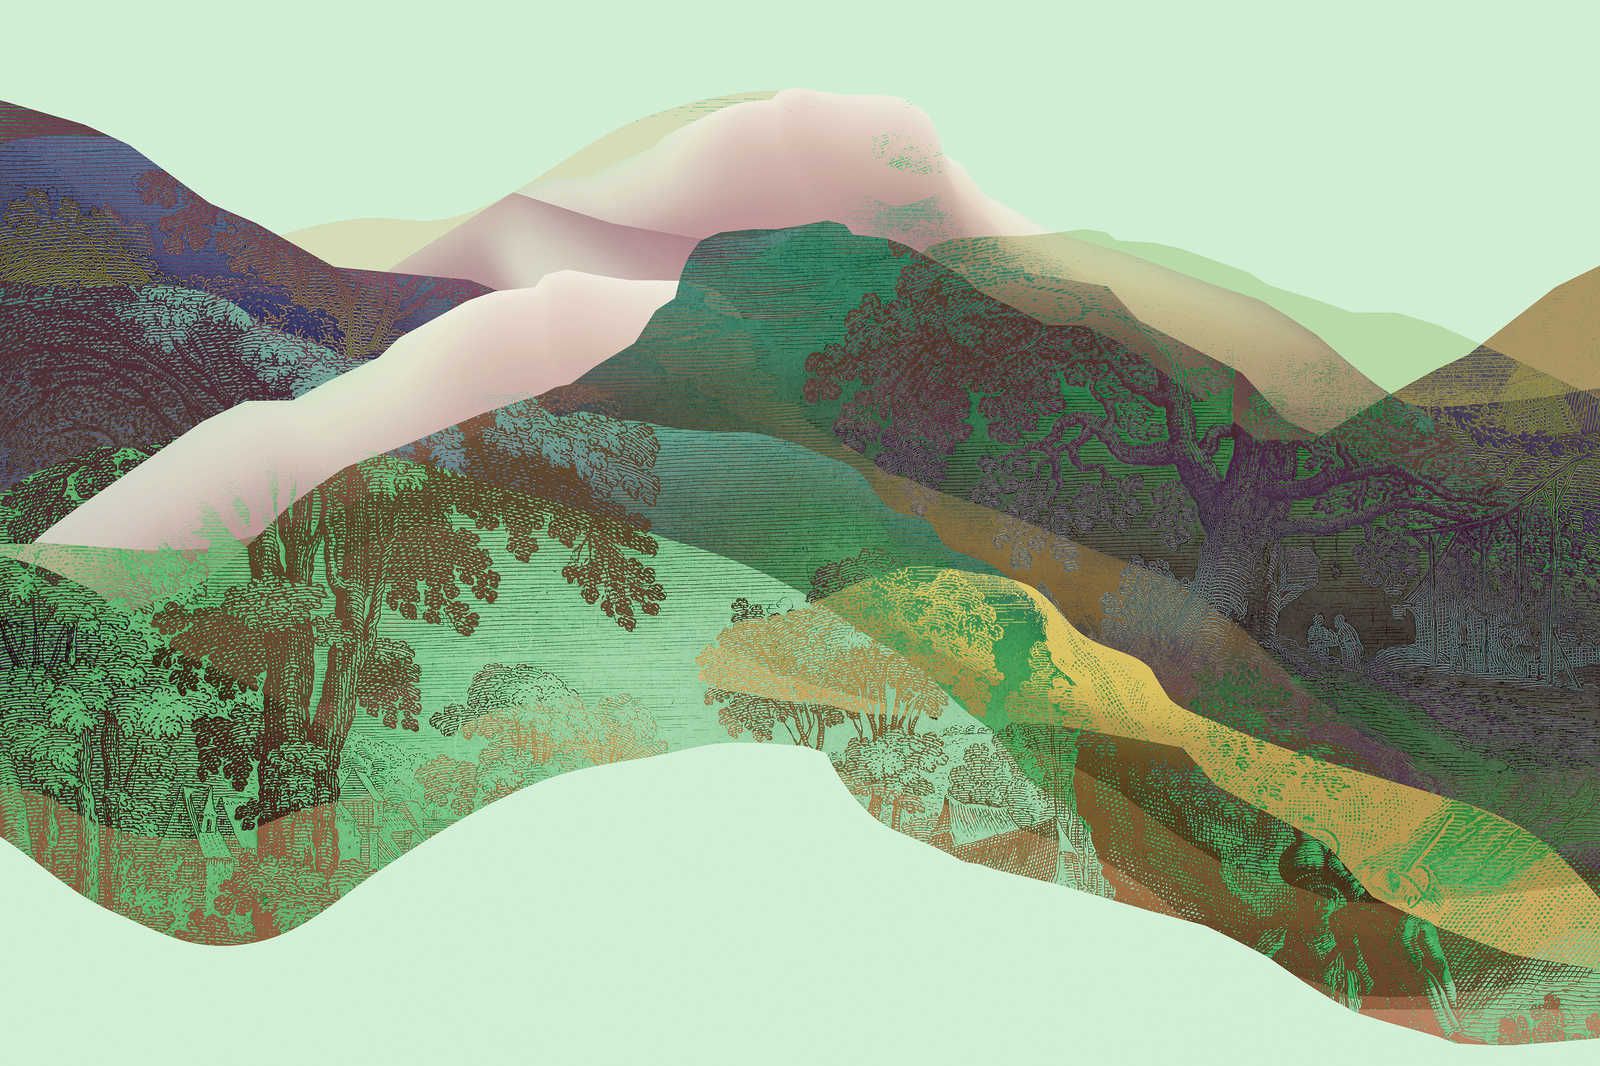             Magic Mountain 3 - Leinwandbild grüne Berge modernes Design – 1,20 m x 0,80 m
        